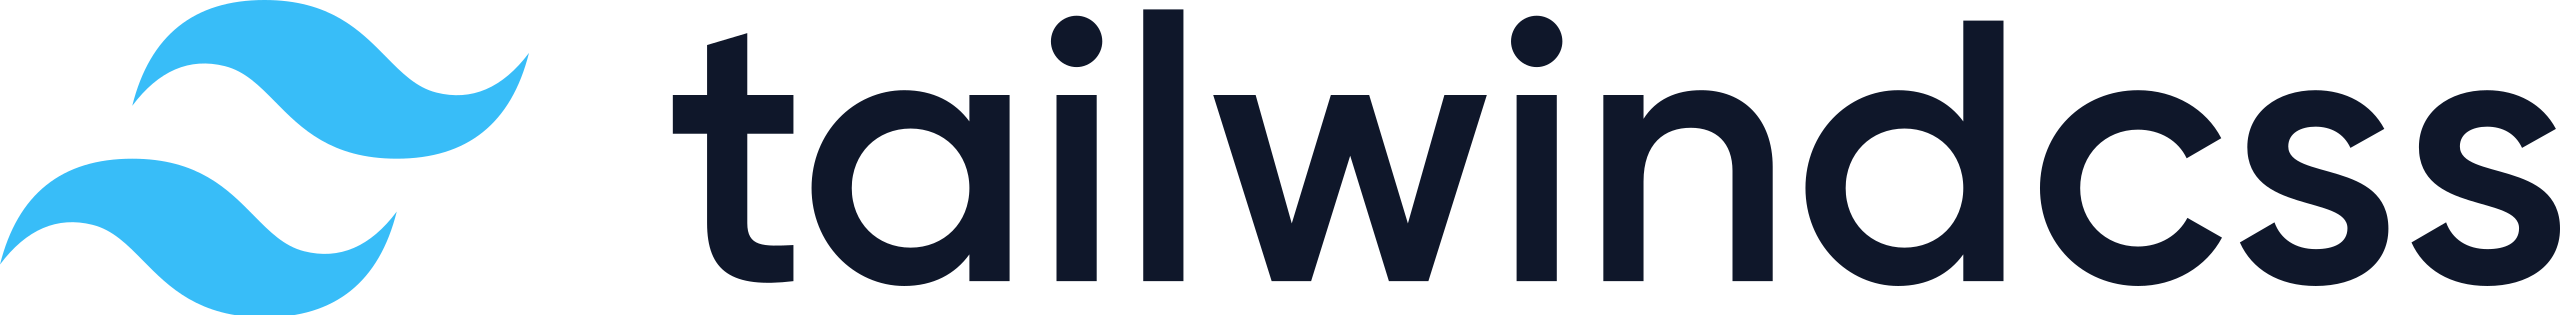 Tailwind_CSS_logo.svg